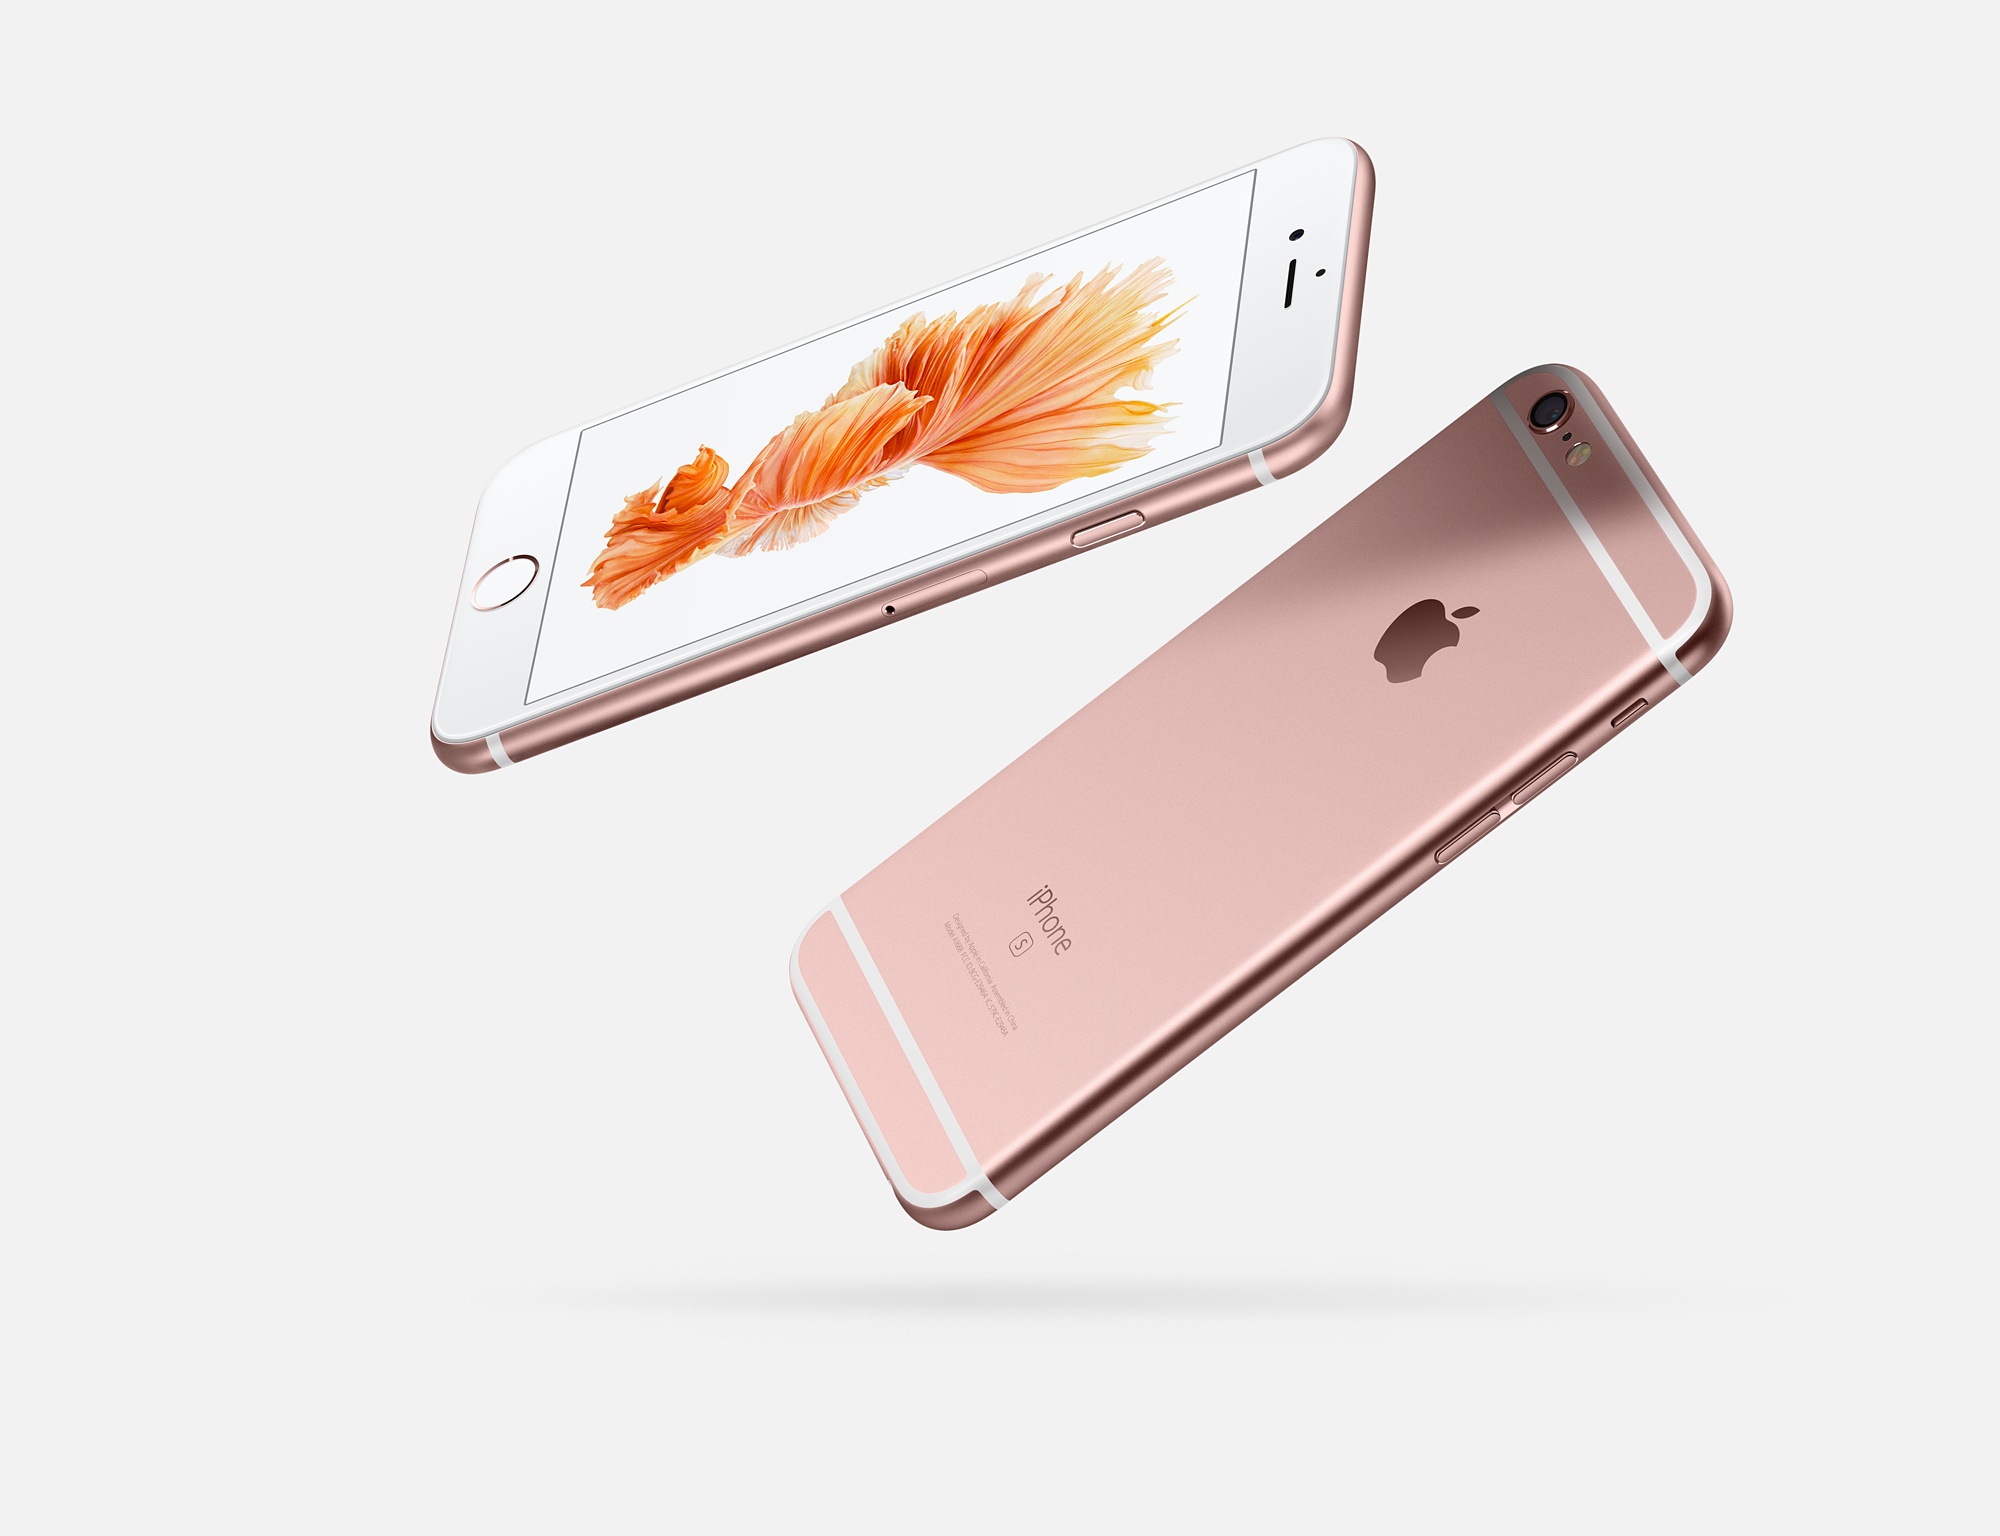 Iphone 6s E Iphone 6s Plus Tudo Sobre Os Novos Smartphones Da Apple Tecmundo